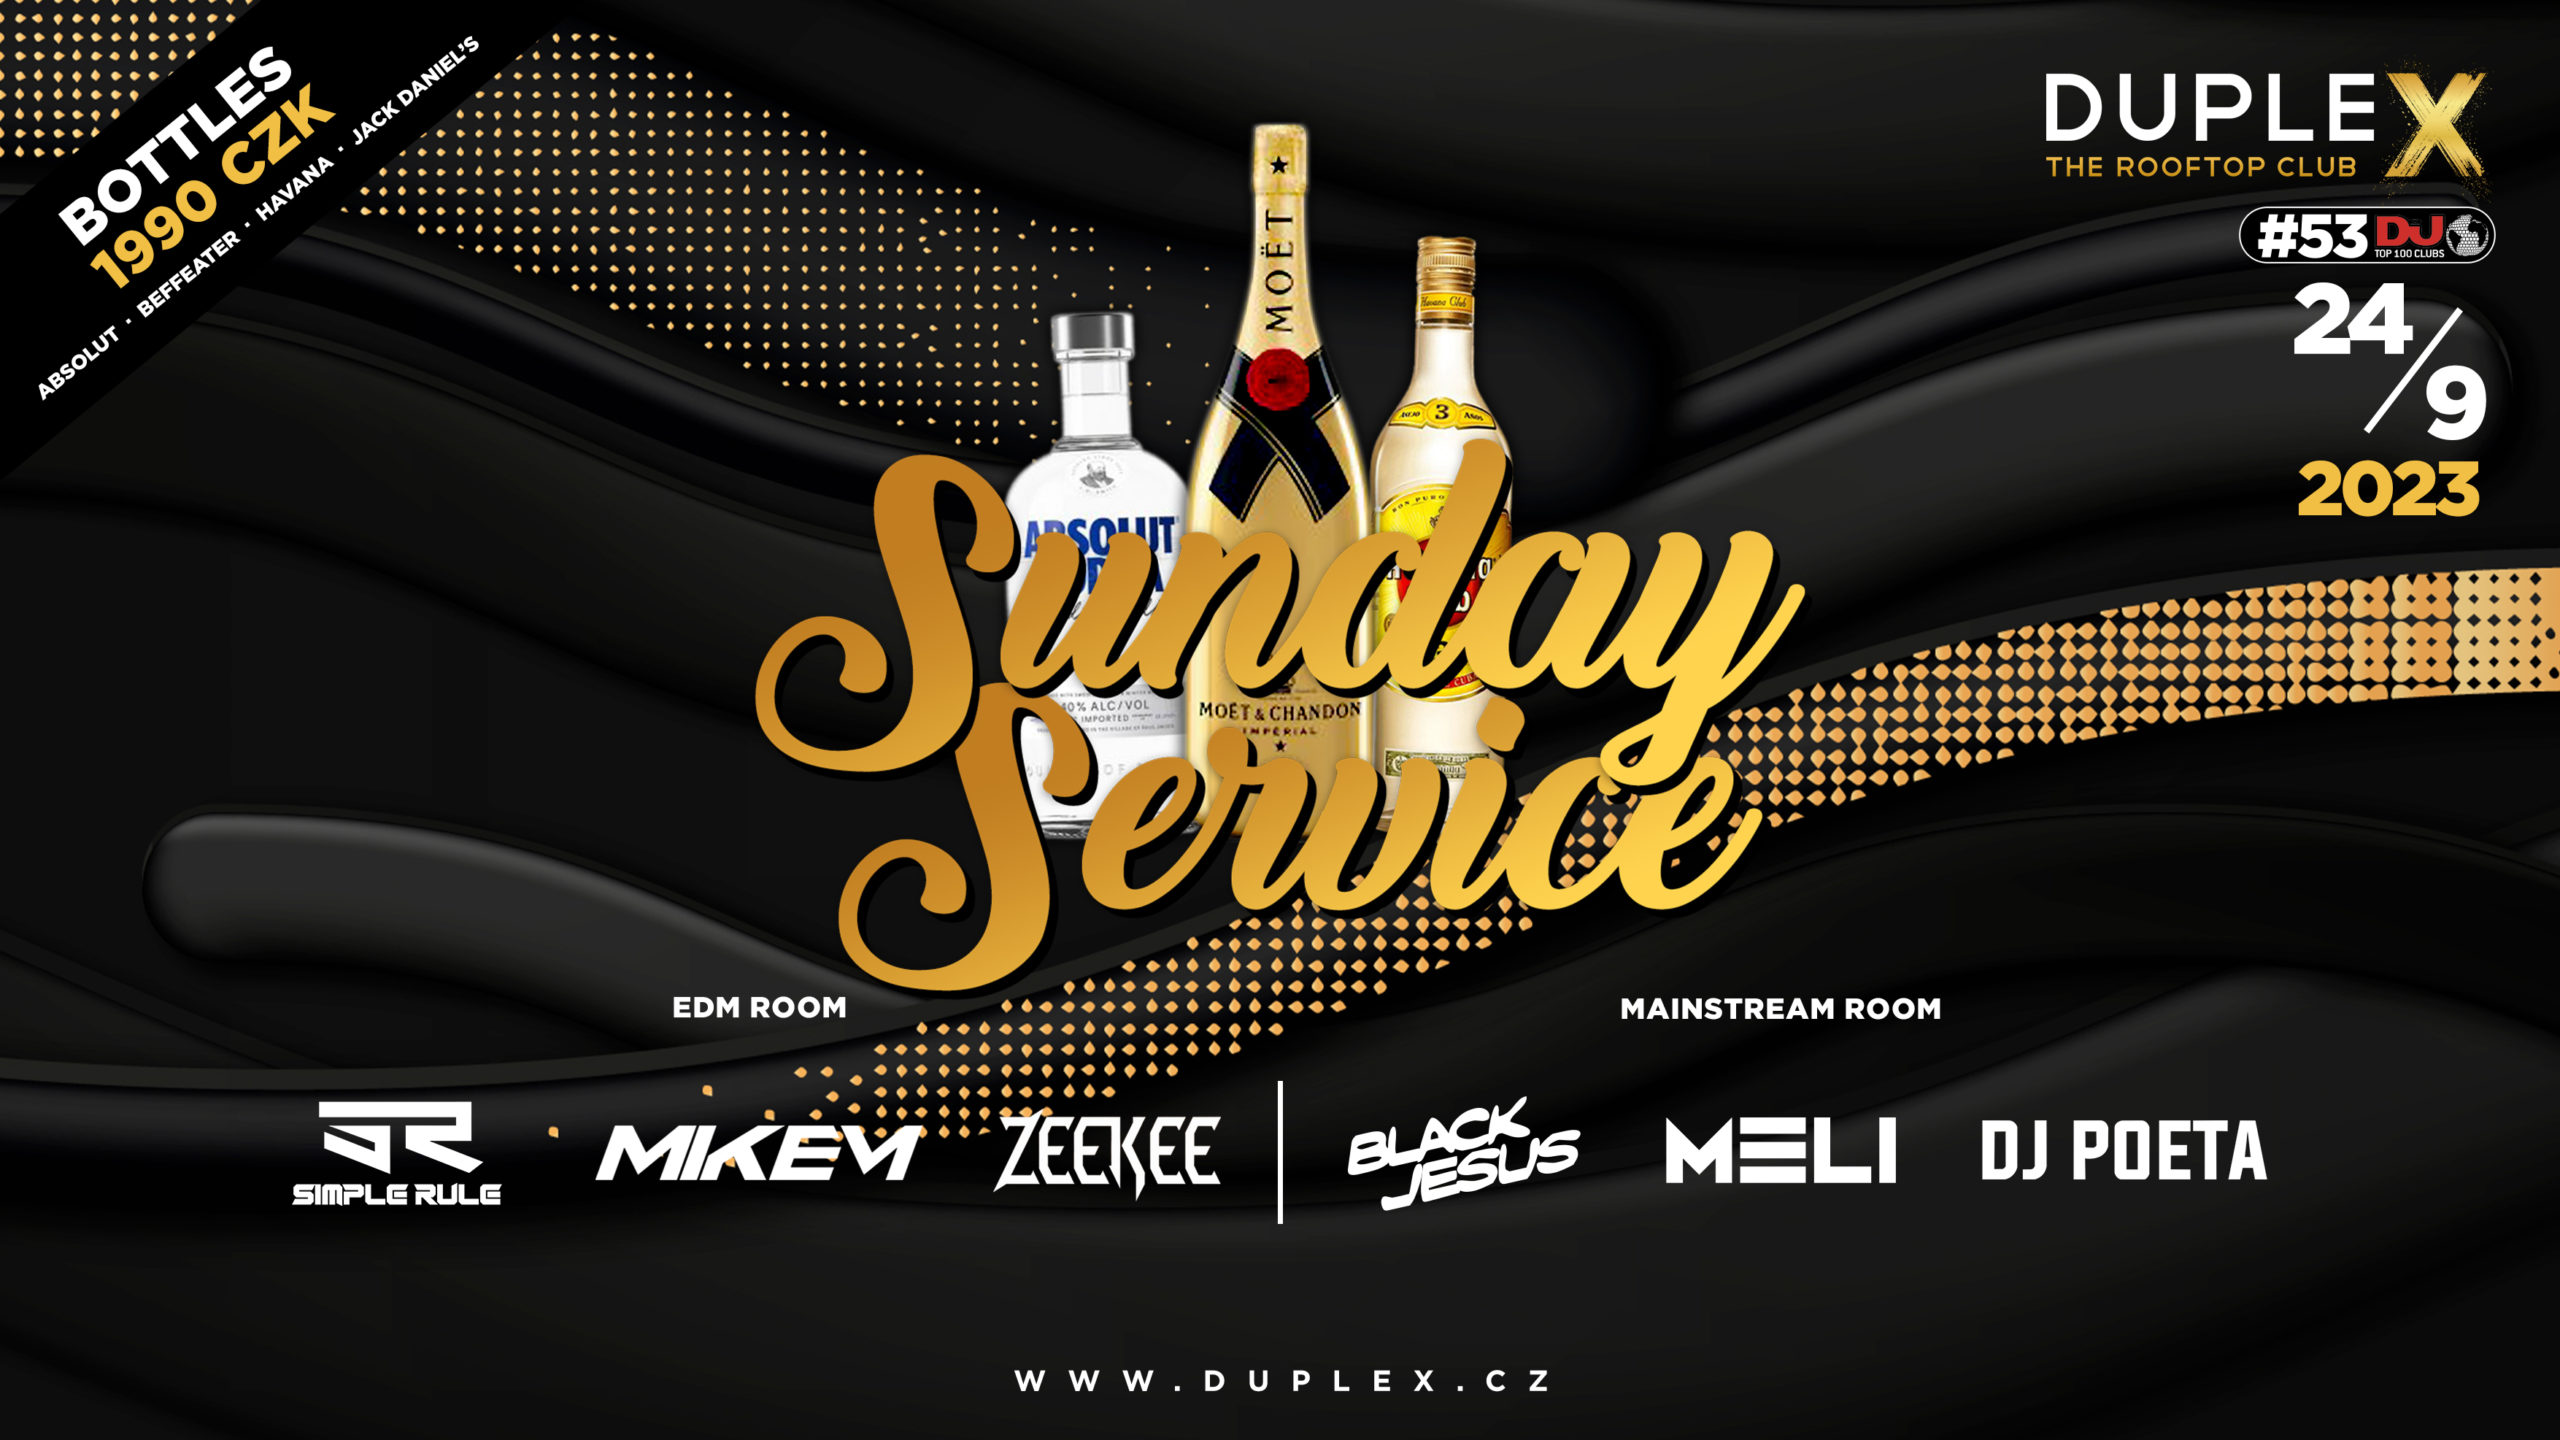 Sunday Service - The Ultimate Sunday Party at Duplex Prague